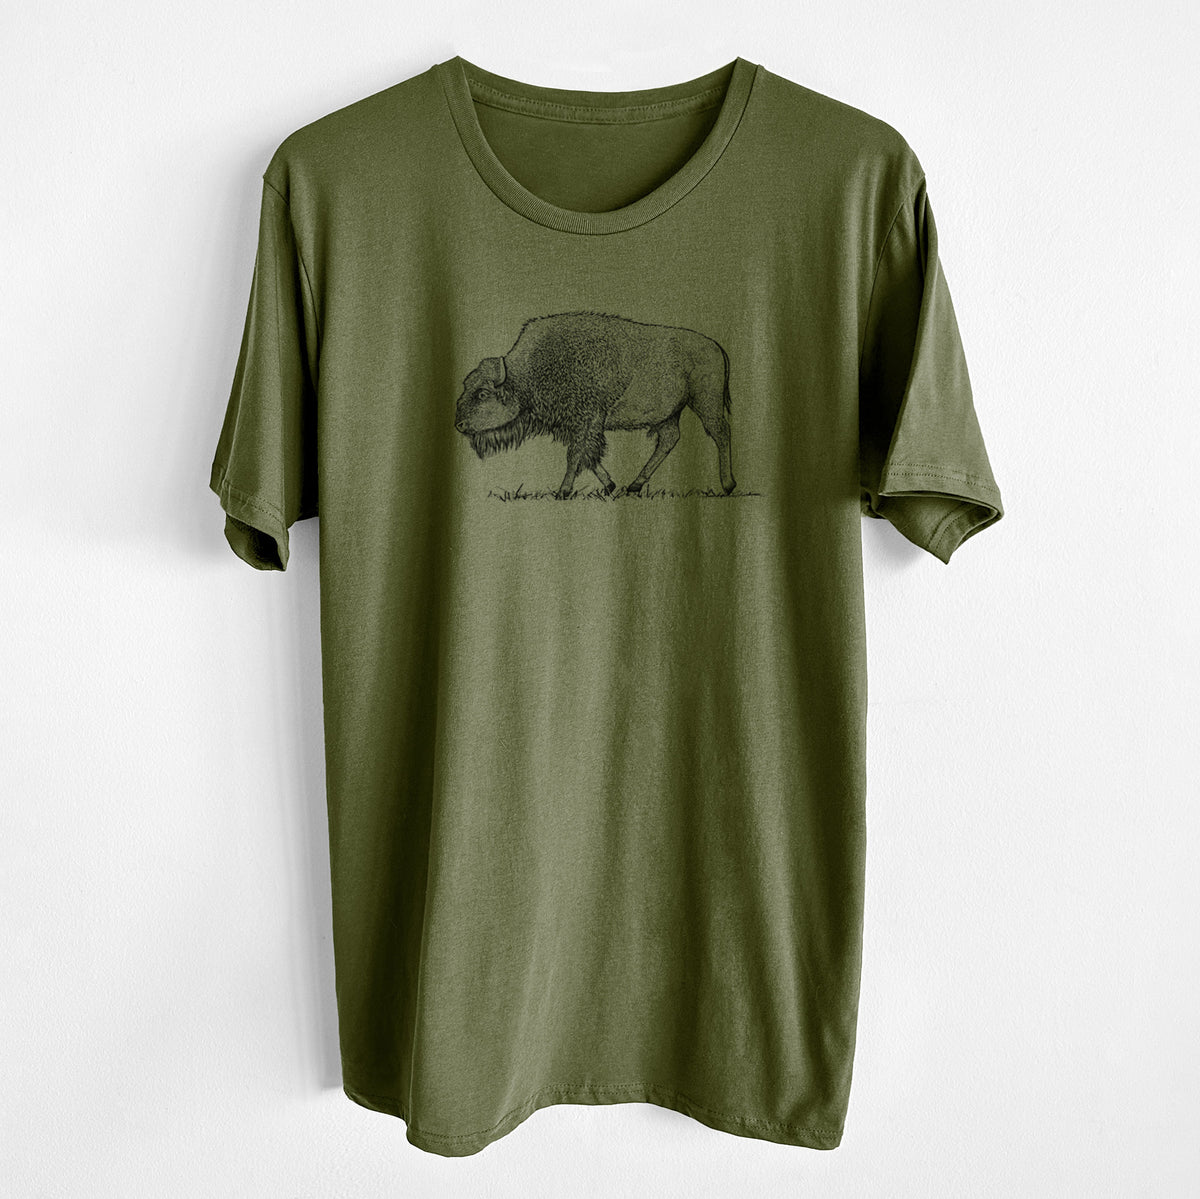 American Bison / Buffalo - Bison bison - Unisex Crewneck - Made in USA - 100% Organic Cotton